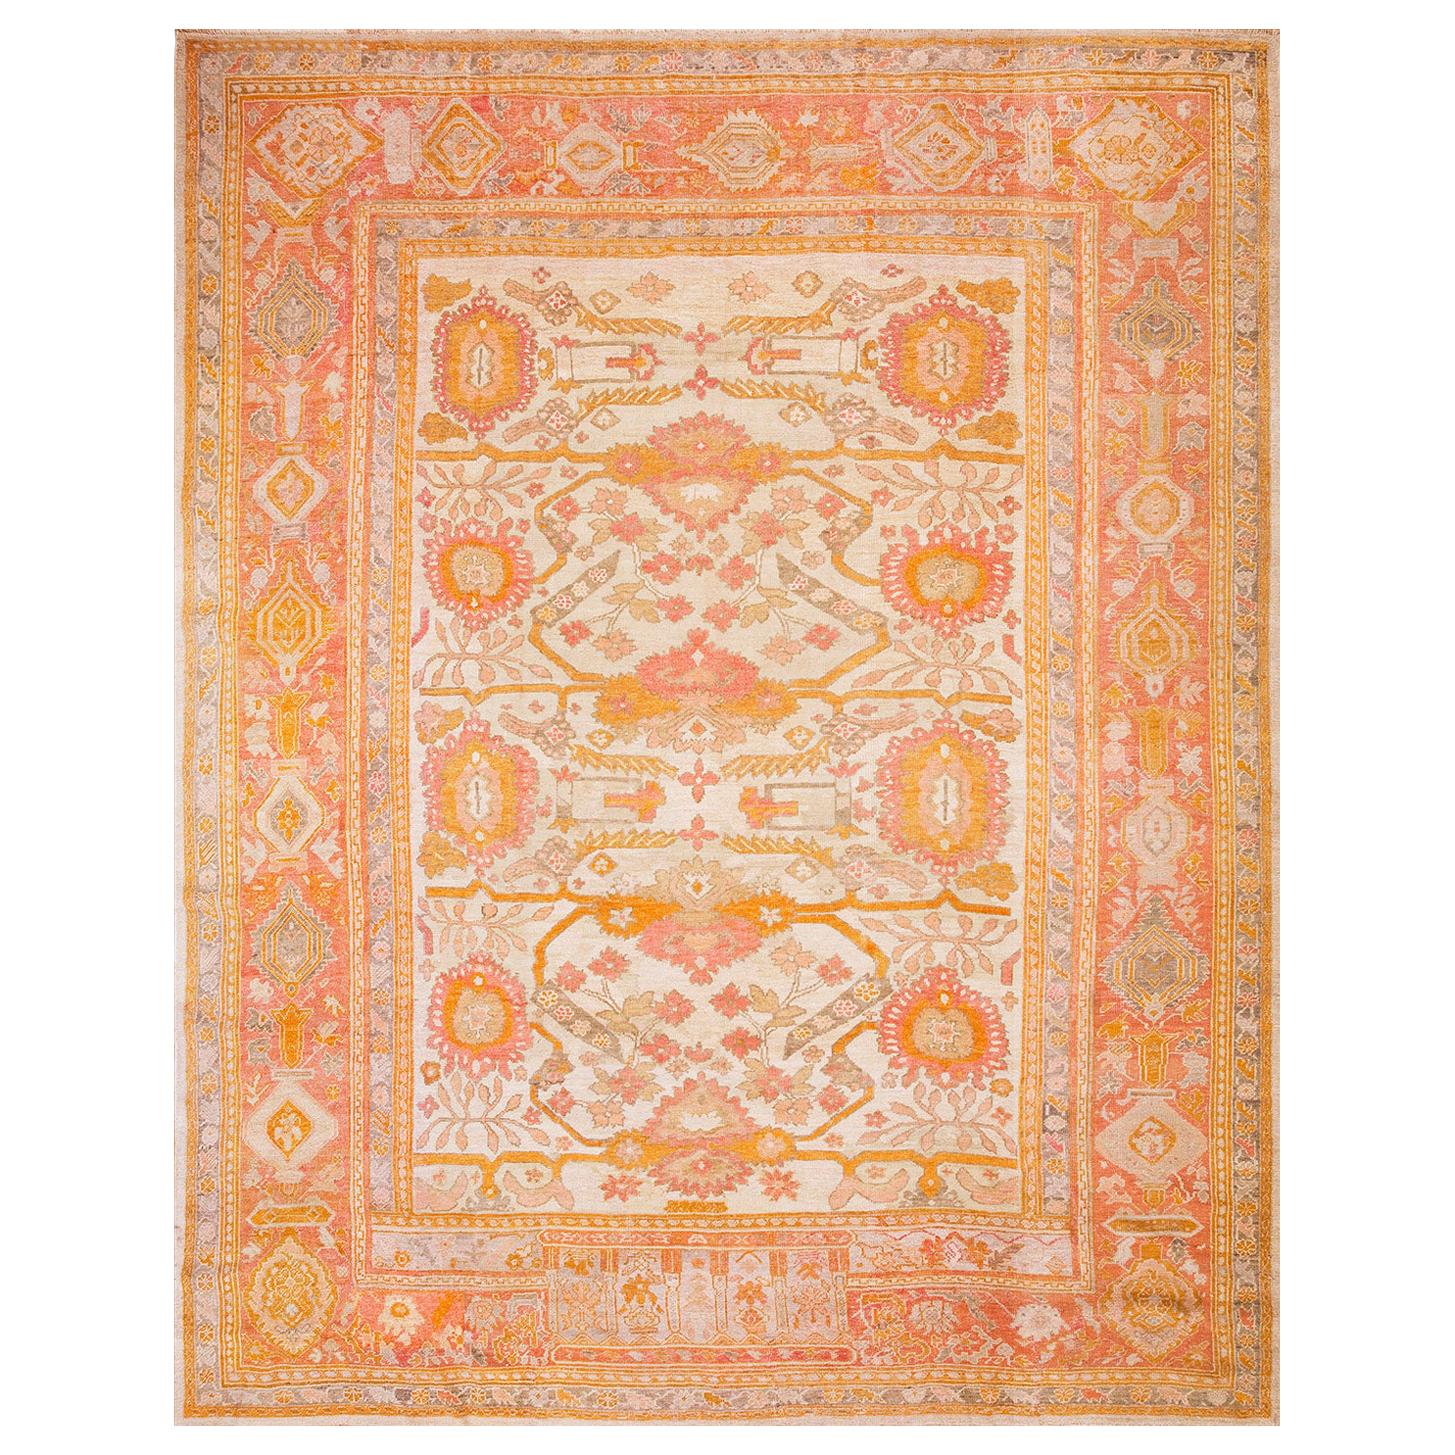 19th Century Turkish Oushak Carpet ( 10'6" x 13'5" - 320 x 415 )